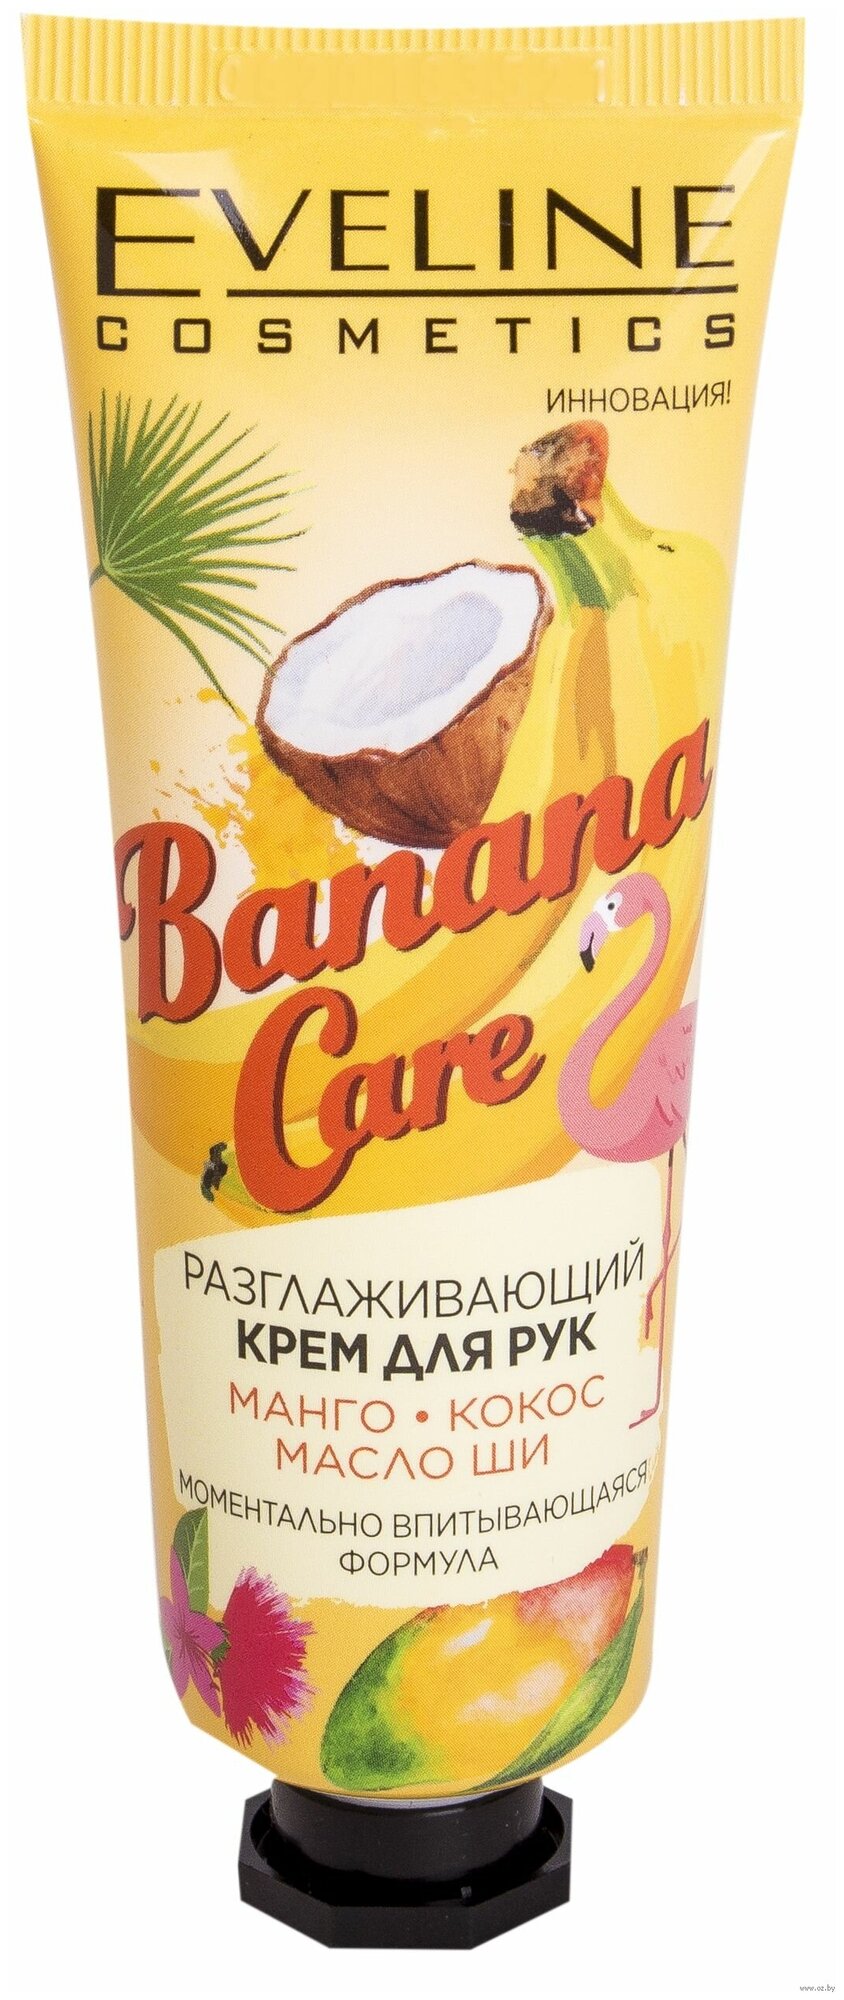 Eveline Cosmetics Крем для рук Banana care Разглаживающий манго кокос масло ши